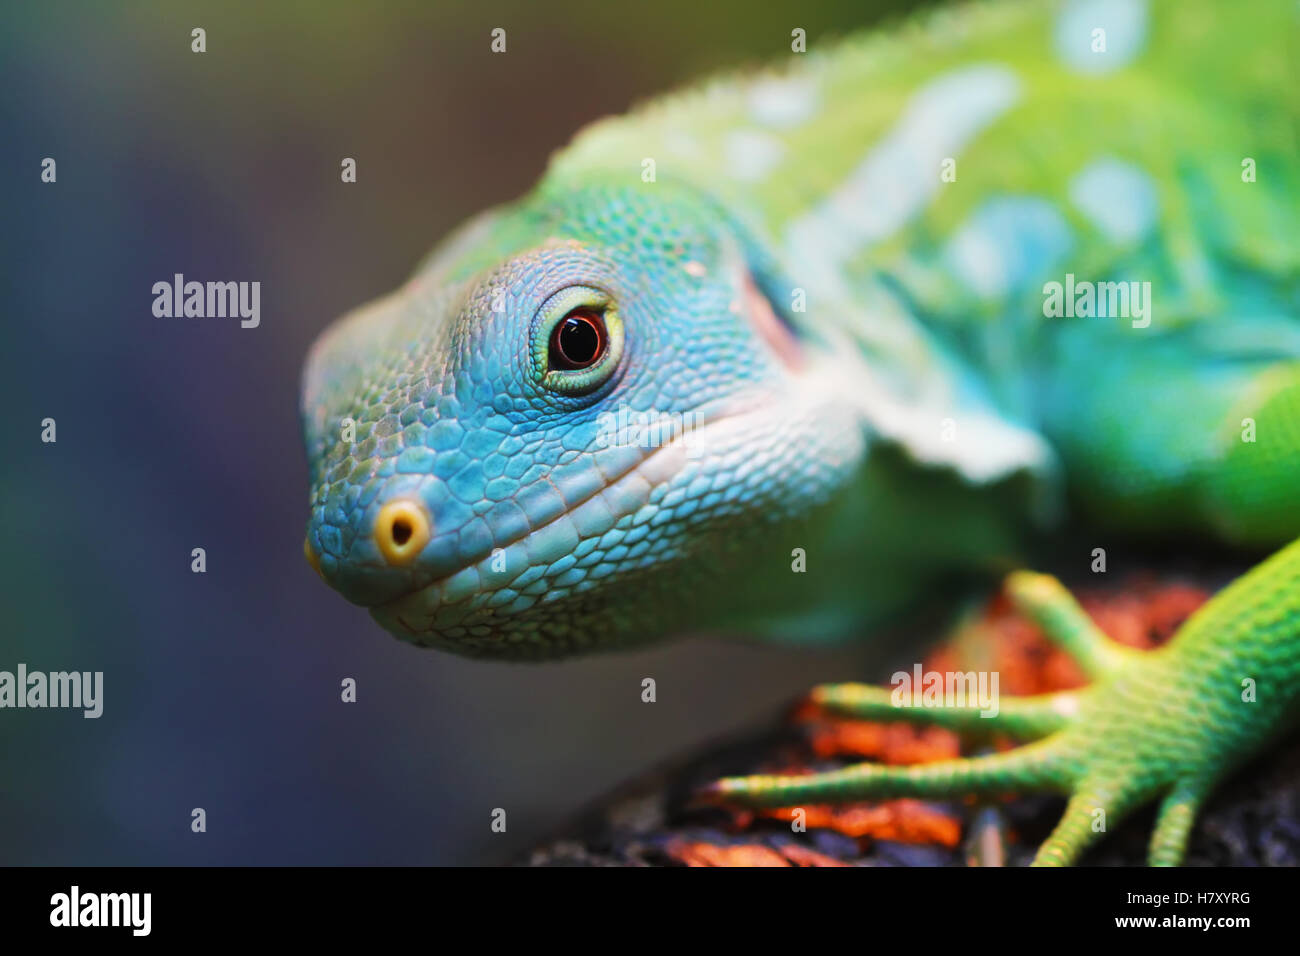 Lizard close up macro animal portrait photo Stock Photo